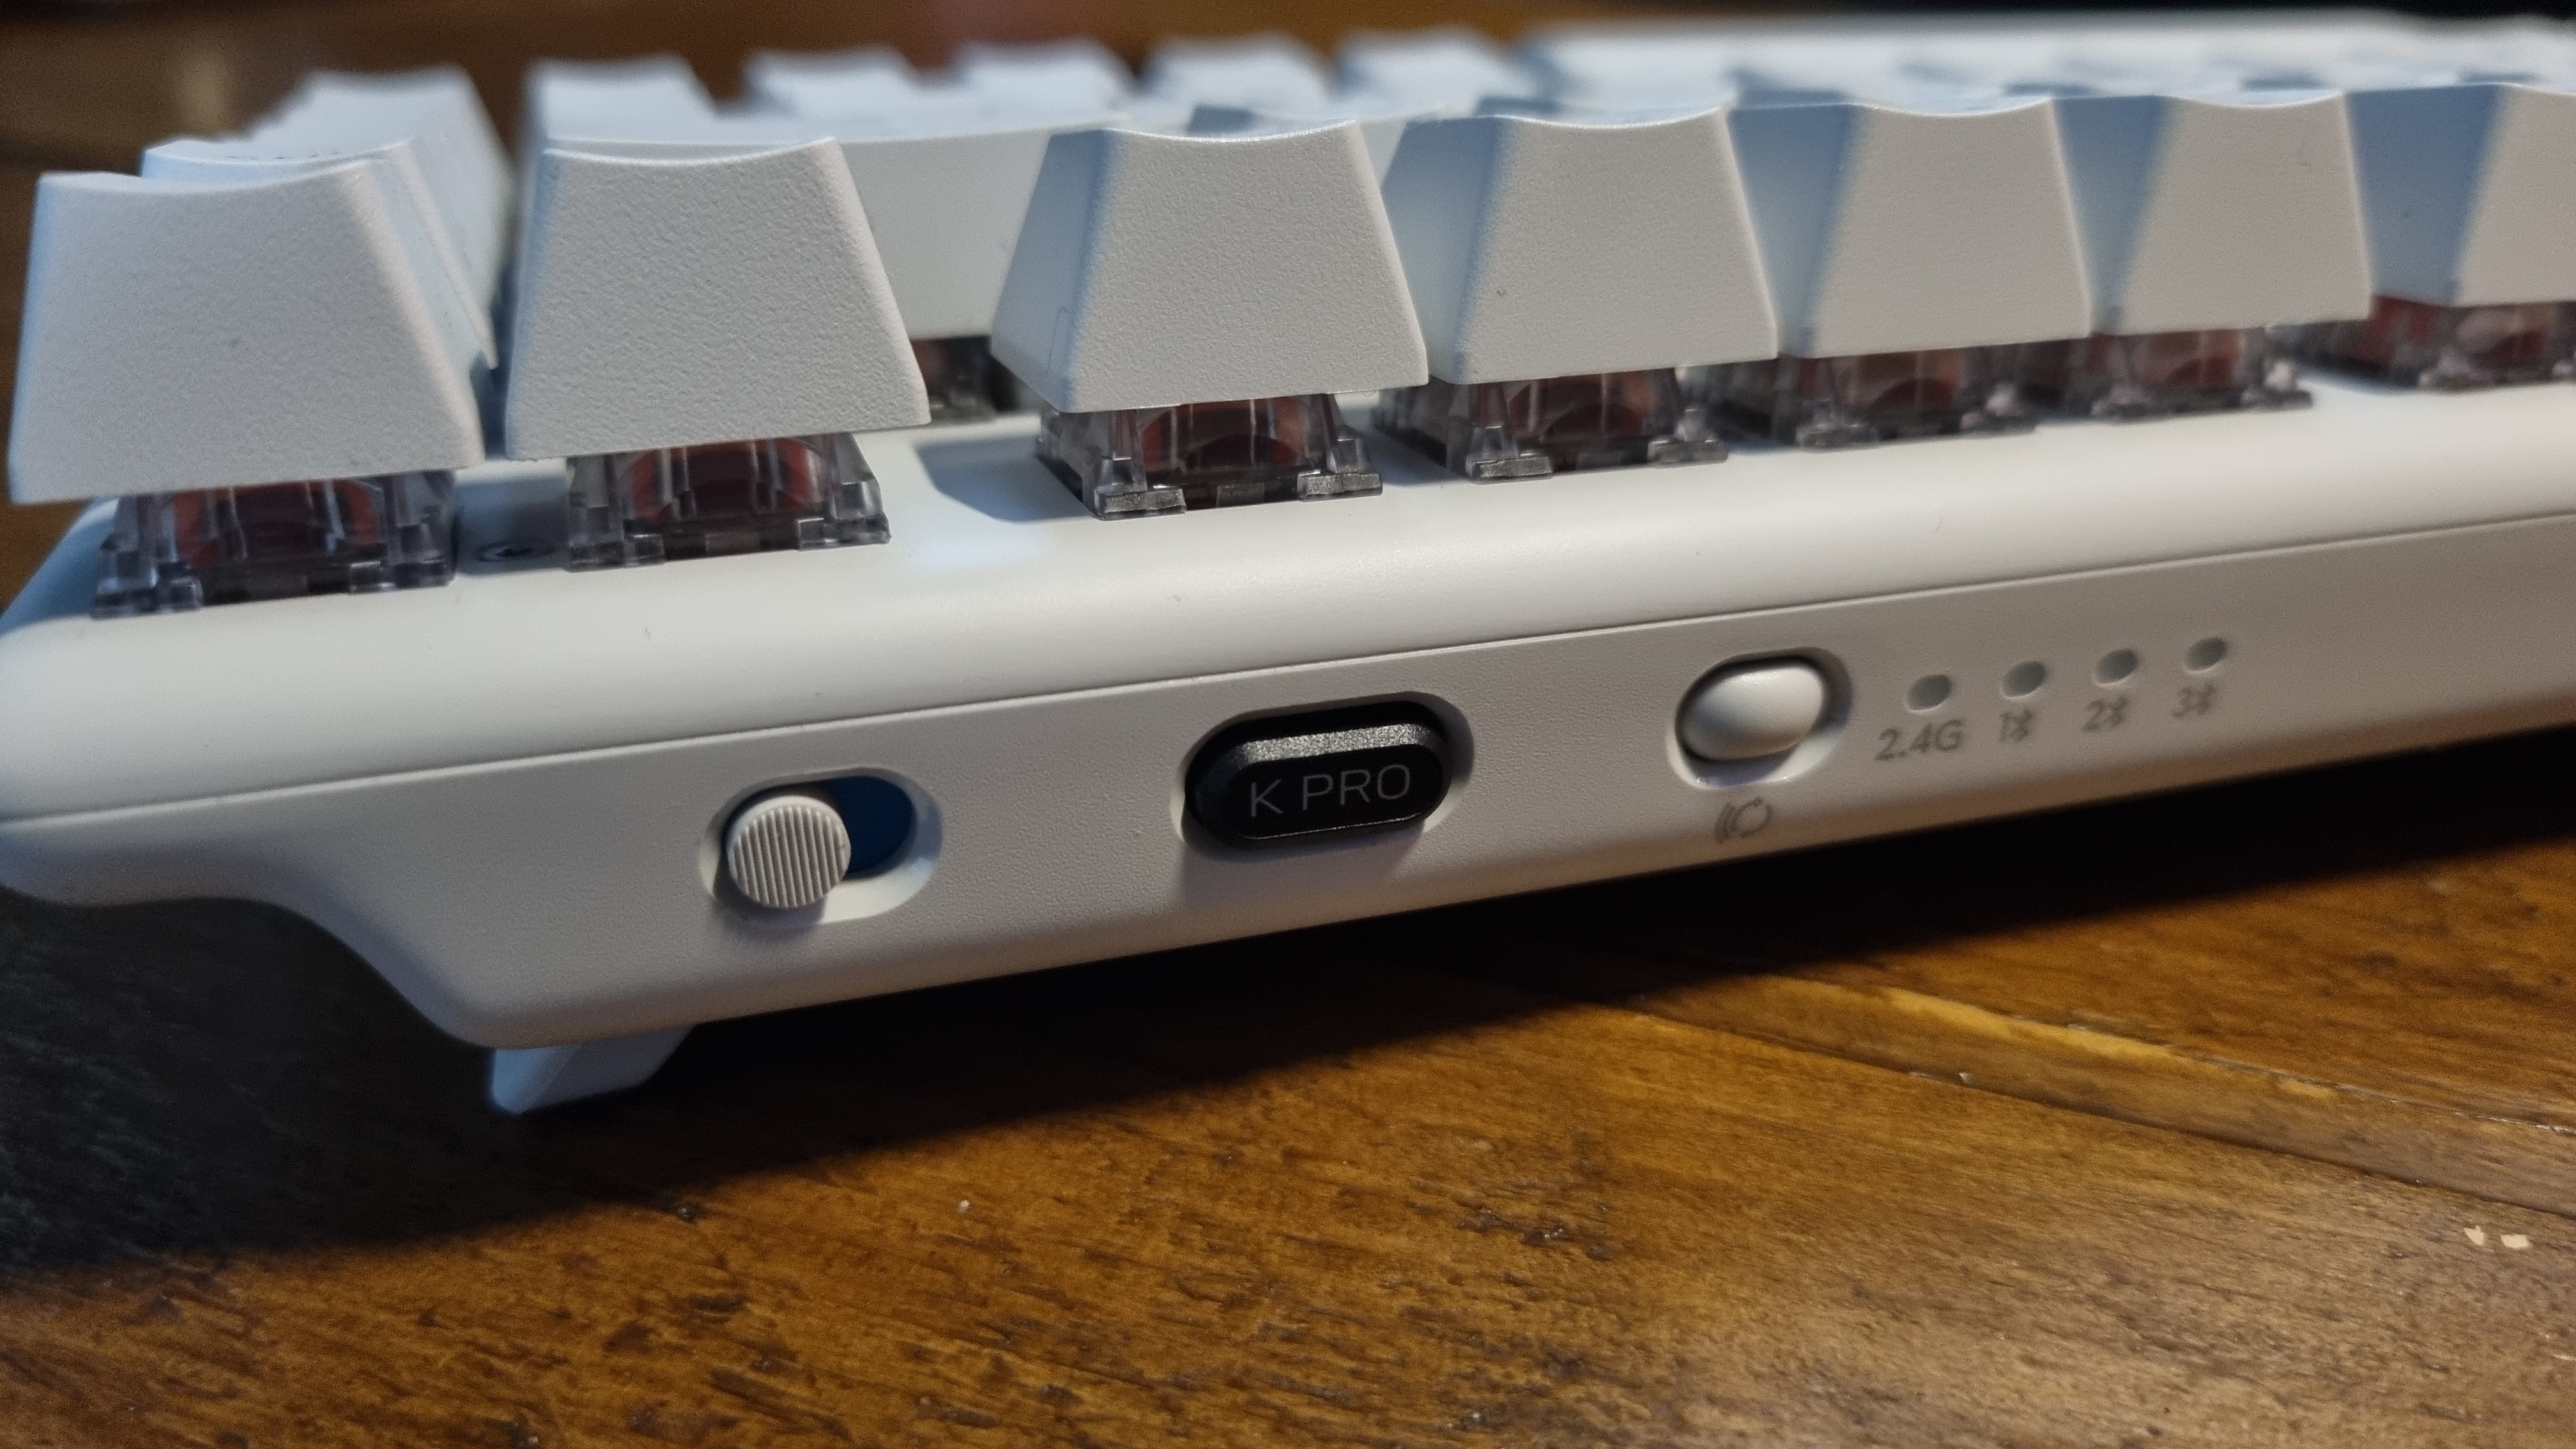 The rear of the Alienware Pro Wireless Gaming Keyboard, unlit